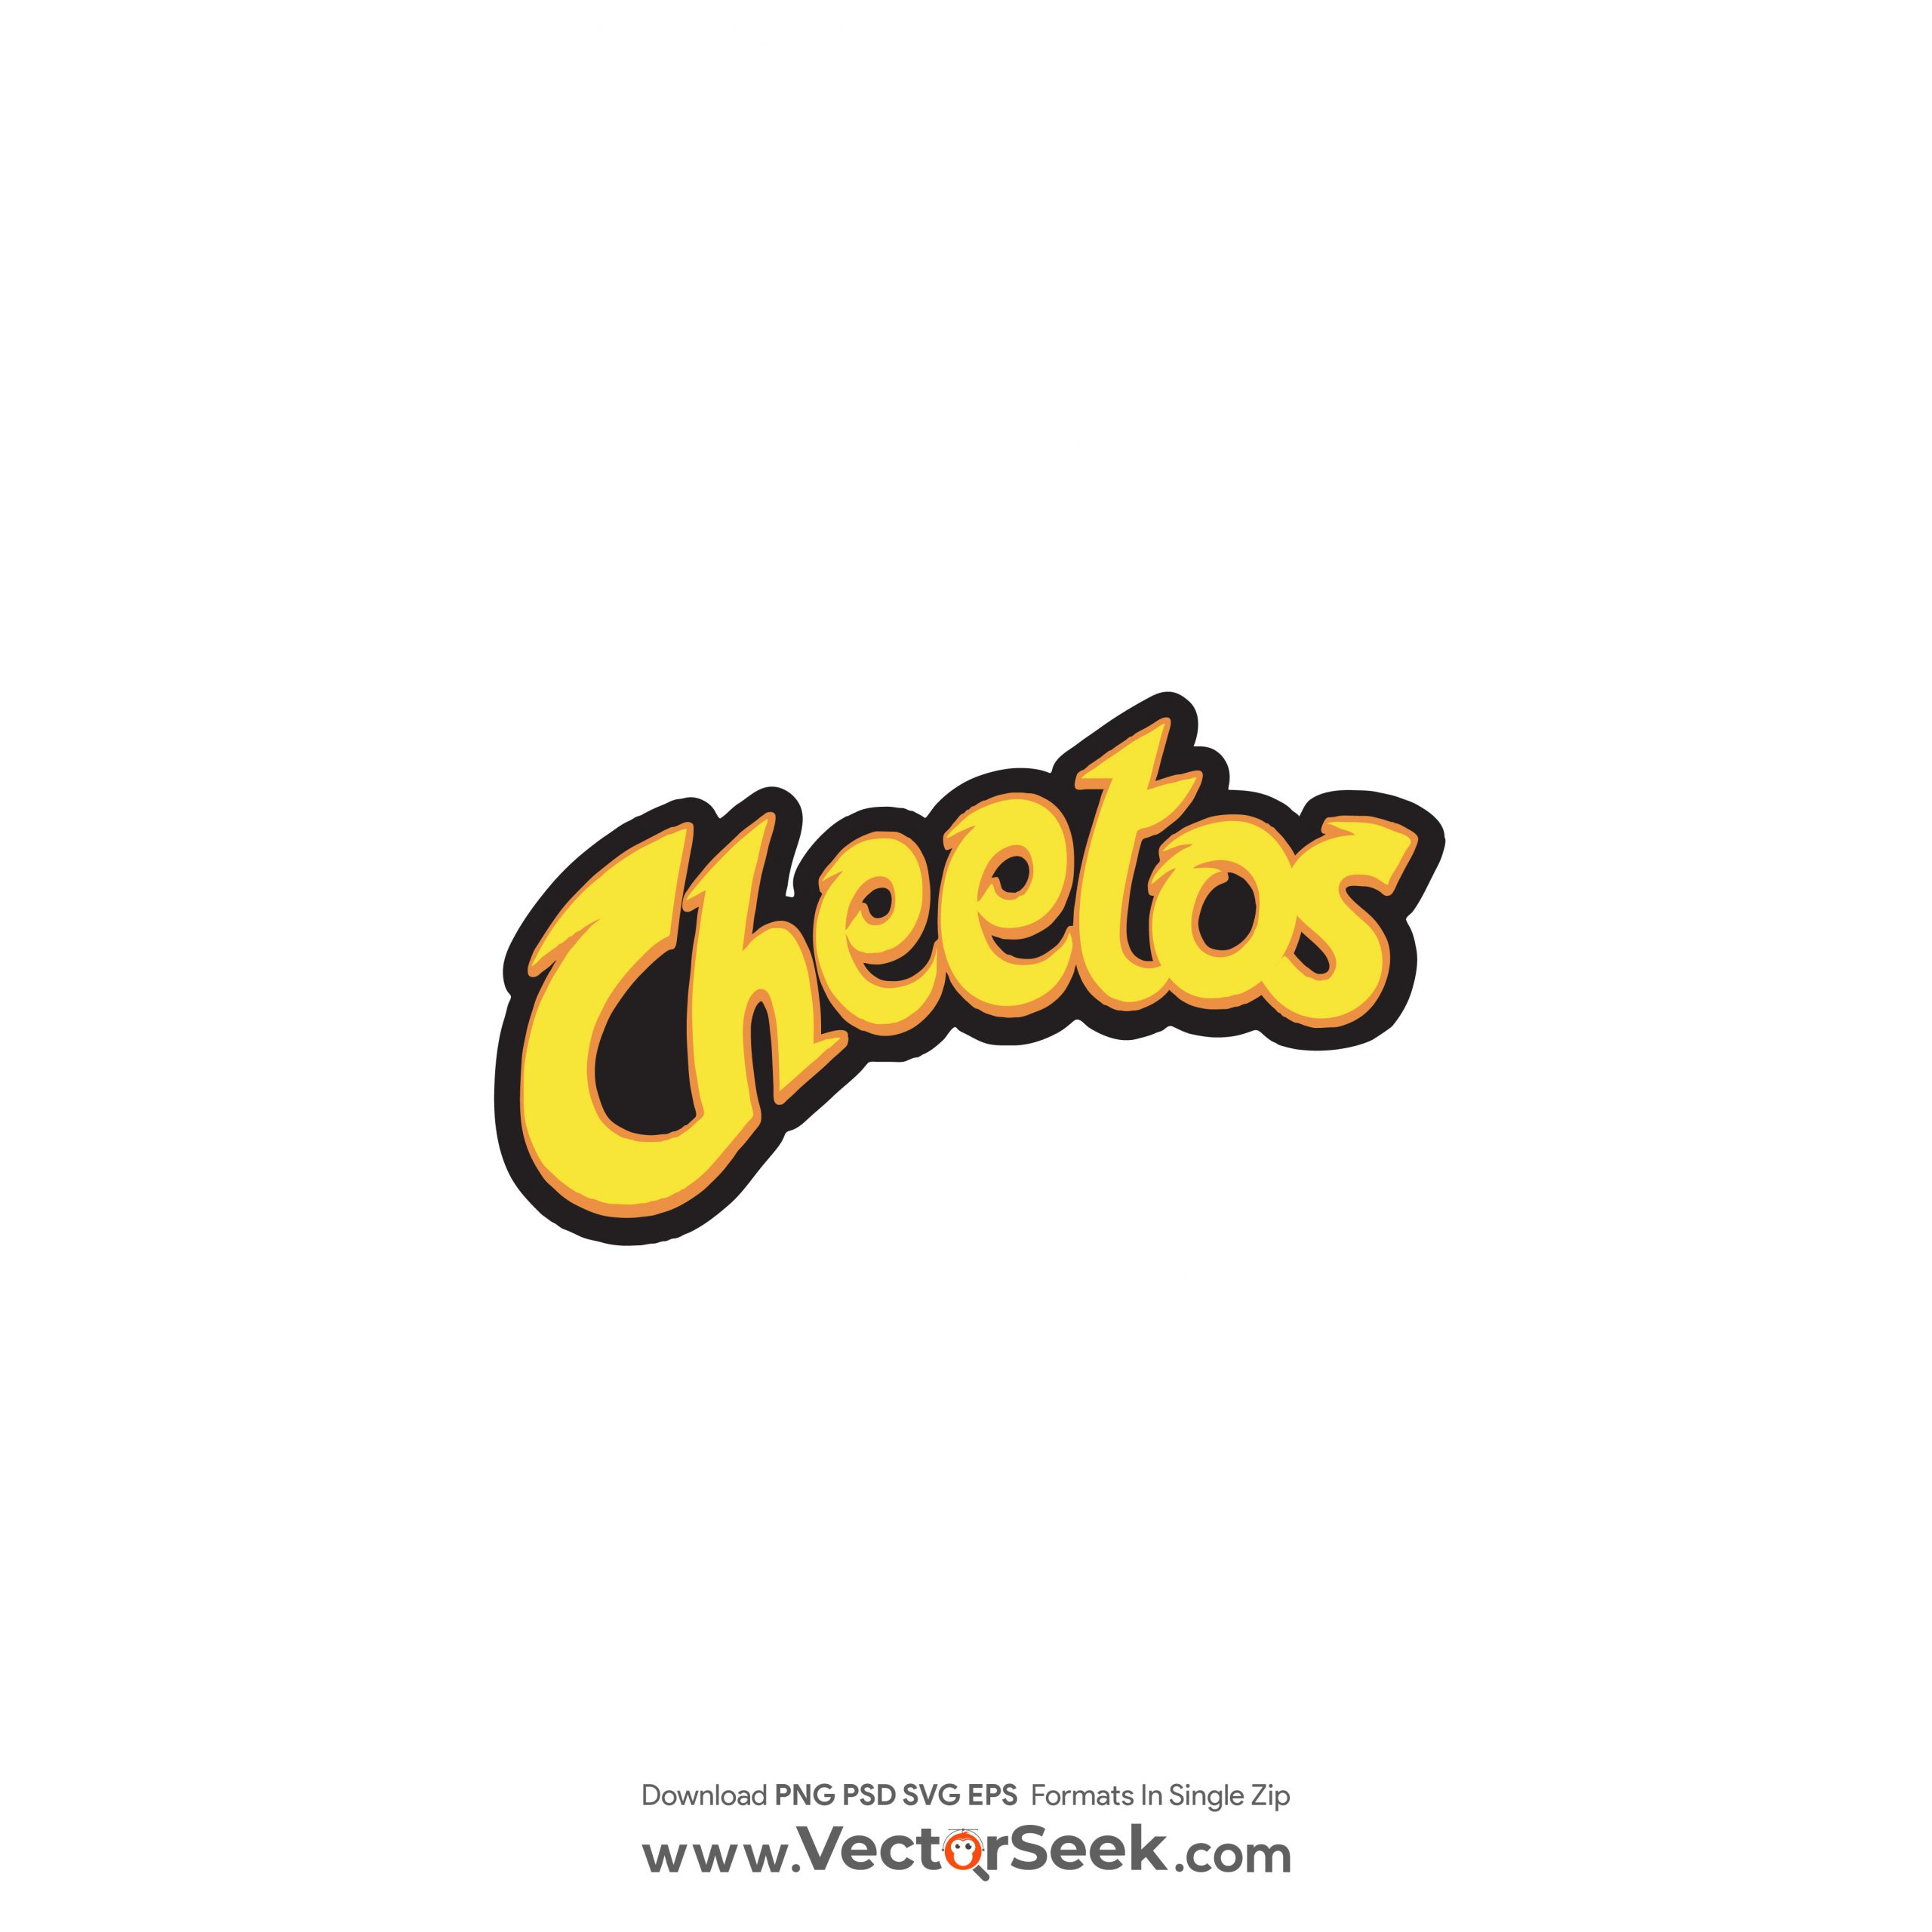 cheetos logo png